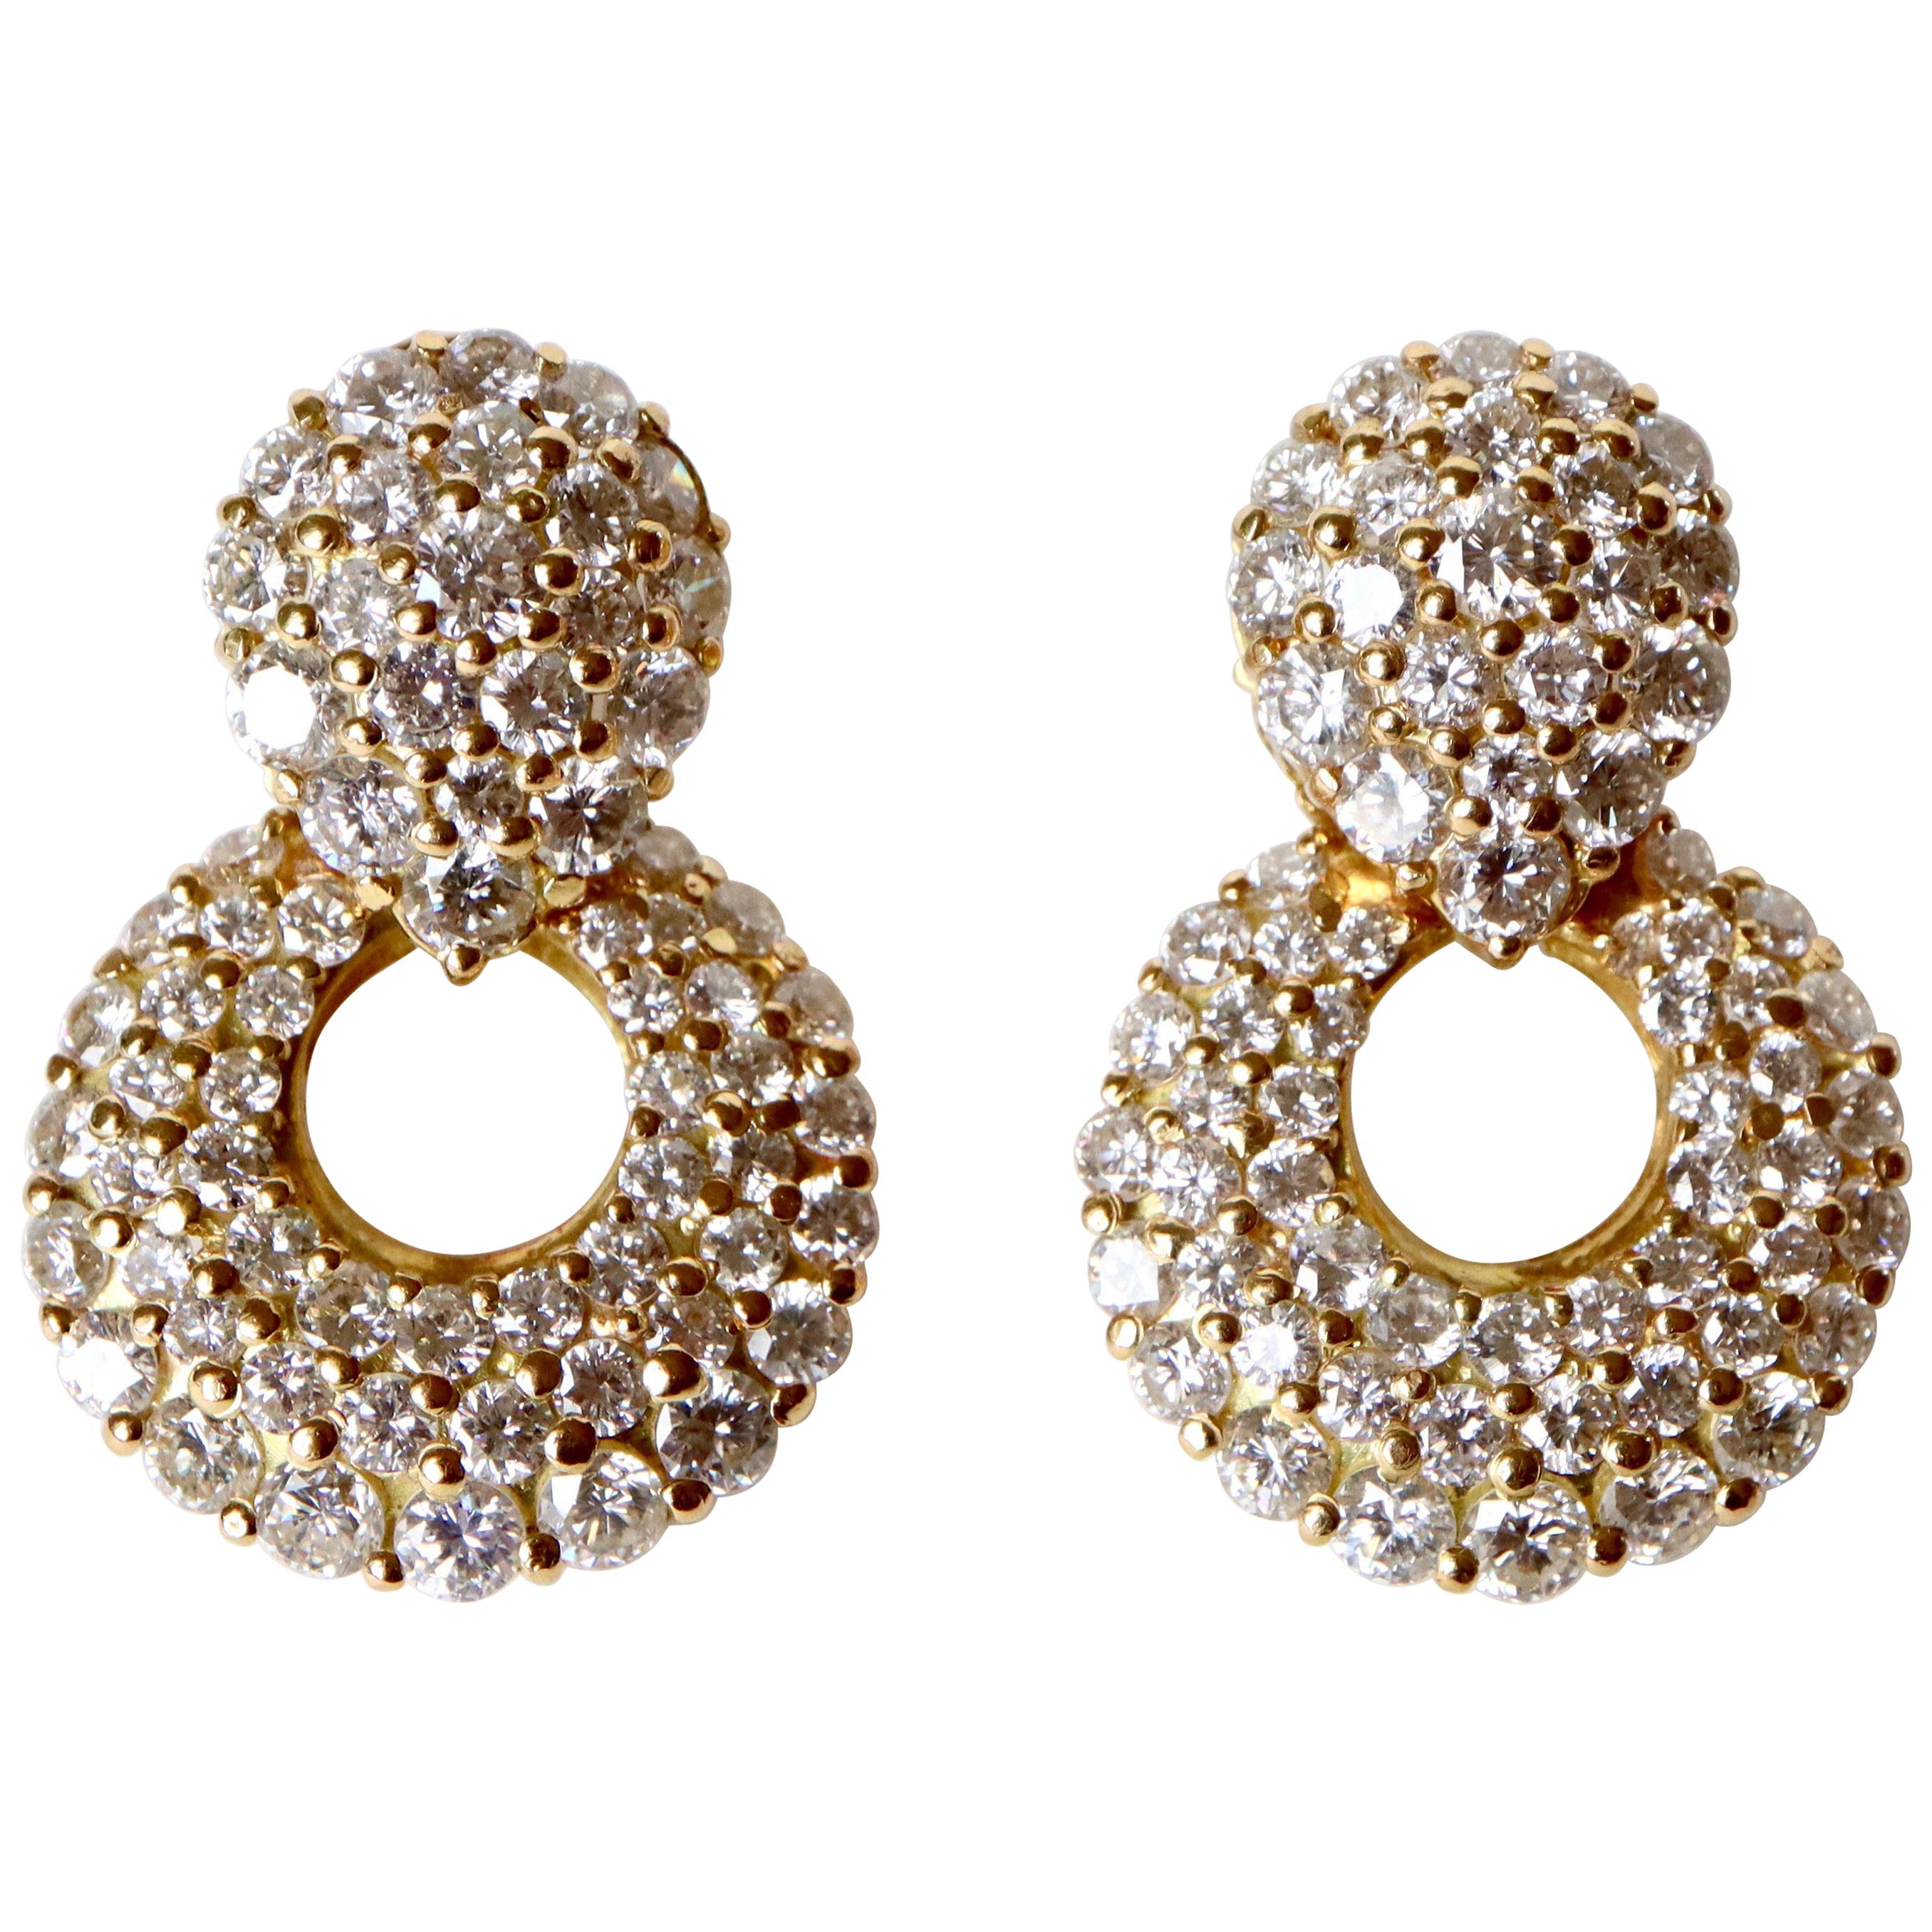 Clip Earrings in 18 Karat Yellow Gold and Diamonds Setting 6 Carat of Diamonds